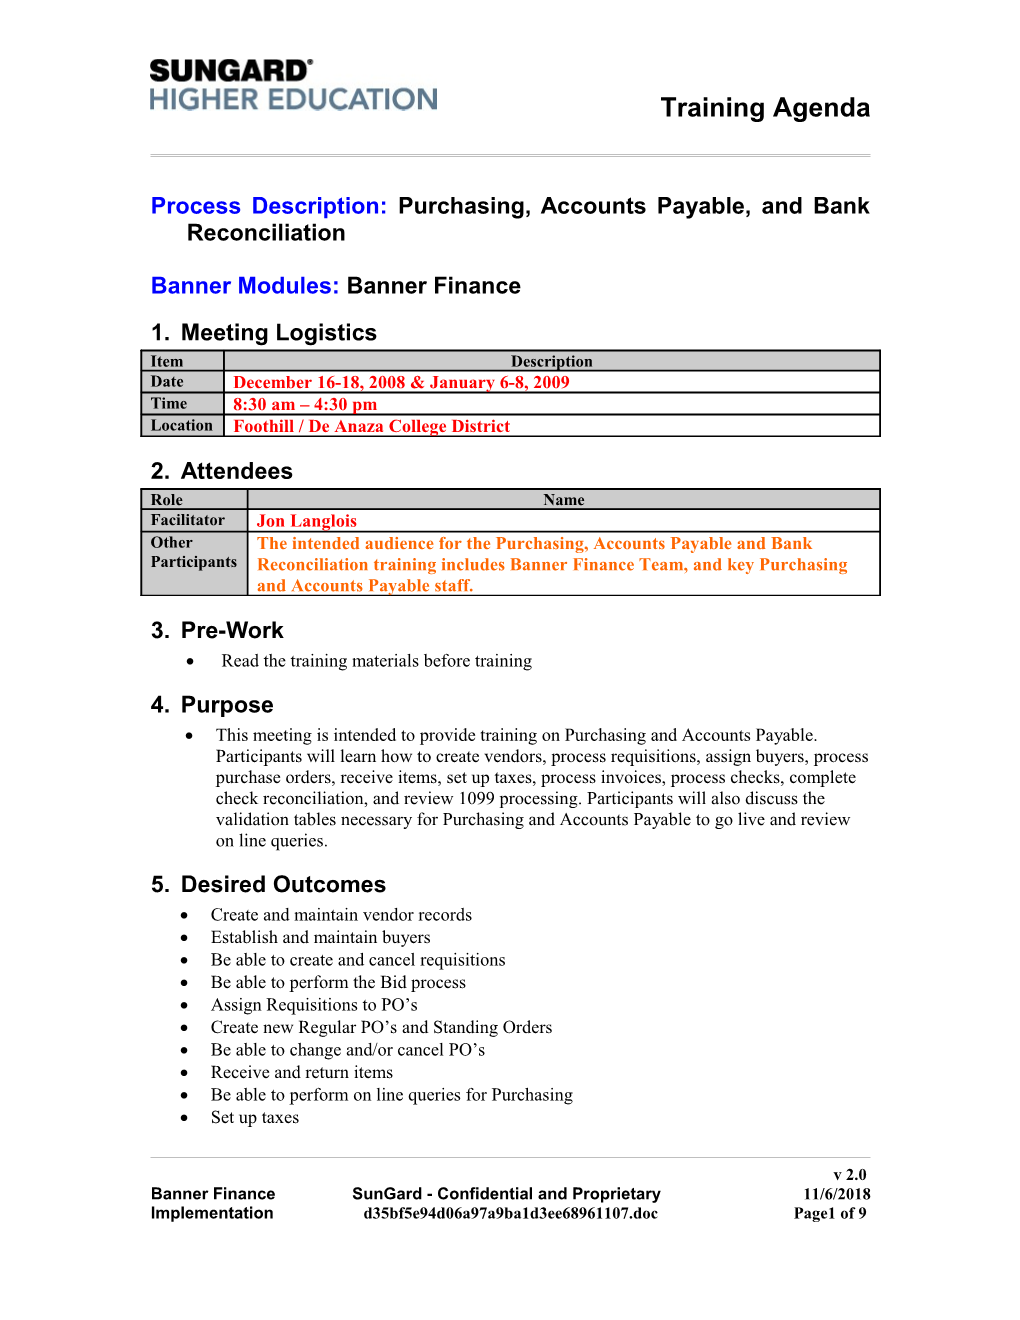 Process Description: Purchasing, Accounts Payable, and Bank Reconciliation